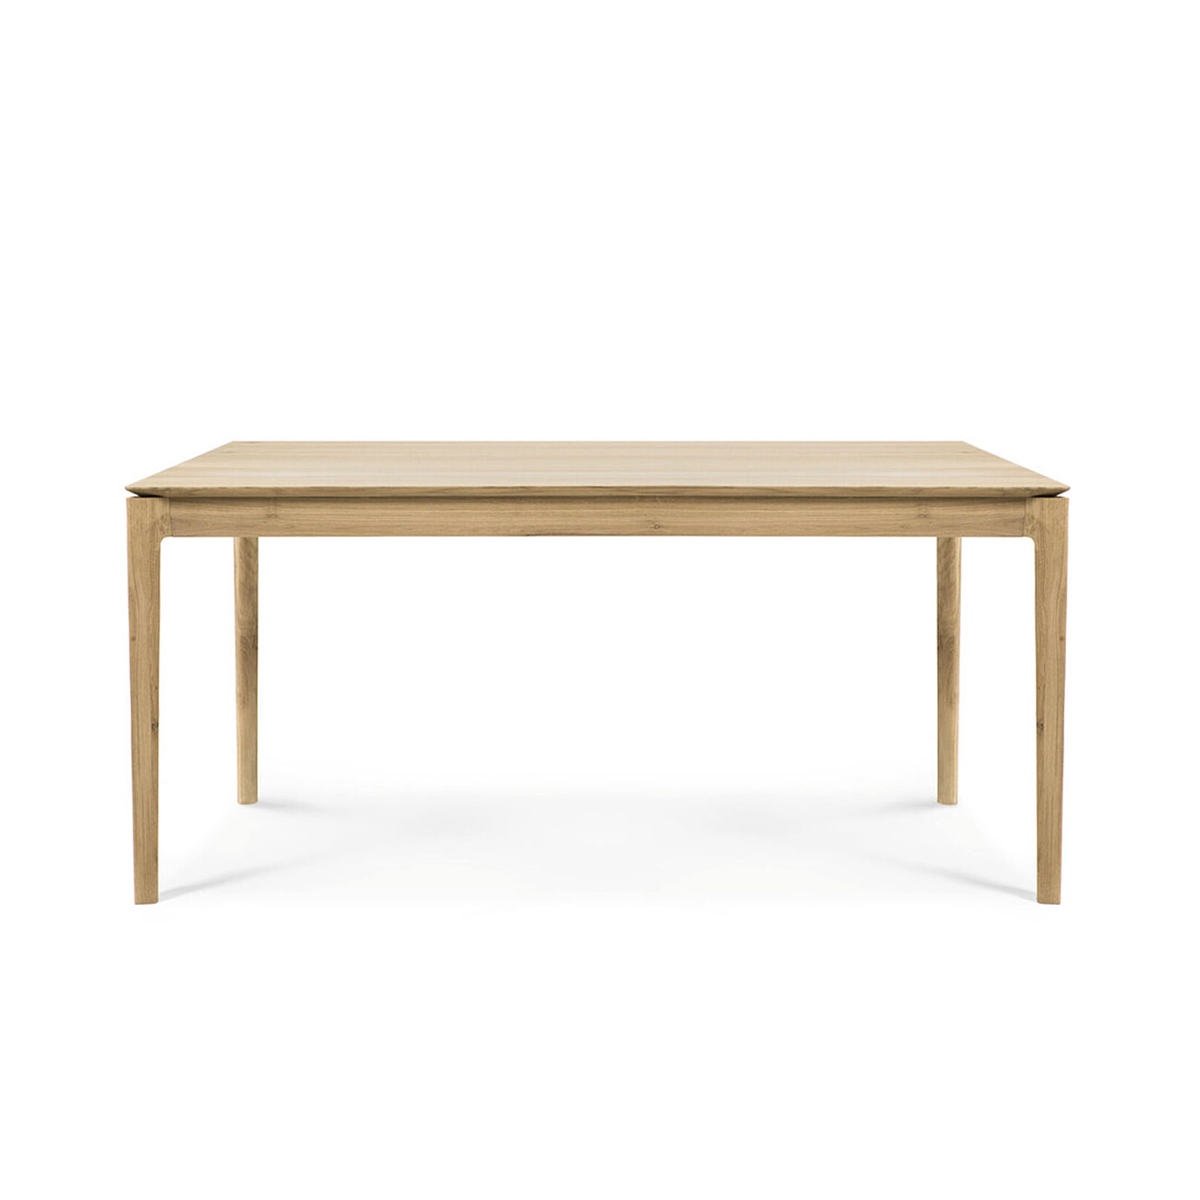 ETHNICRAFT Oak Dining Table Bok 160 오크 복 식탁 - 160DESIGNED  BY BELGIUM